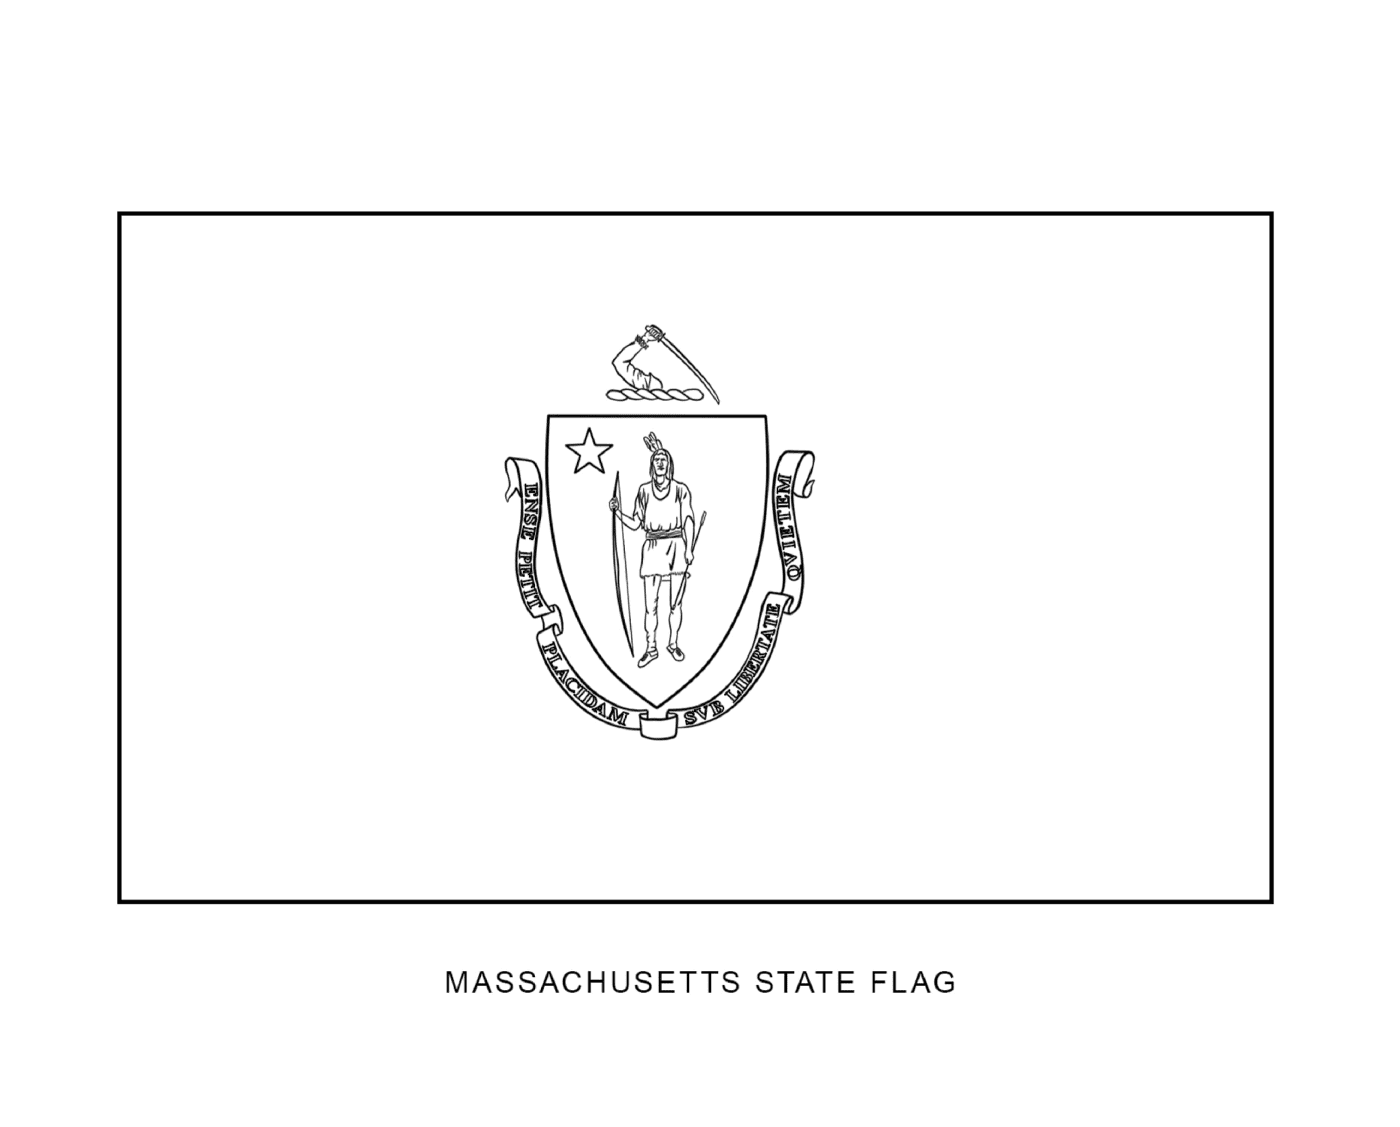  State flag of Massachusetts in black and white 